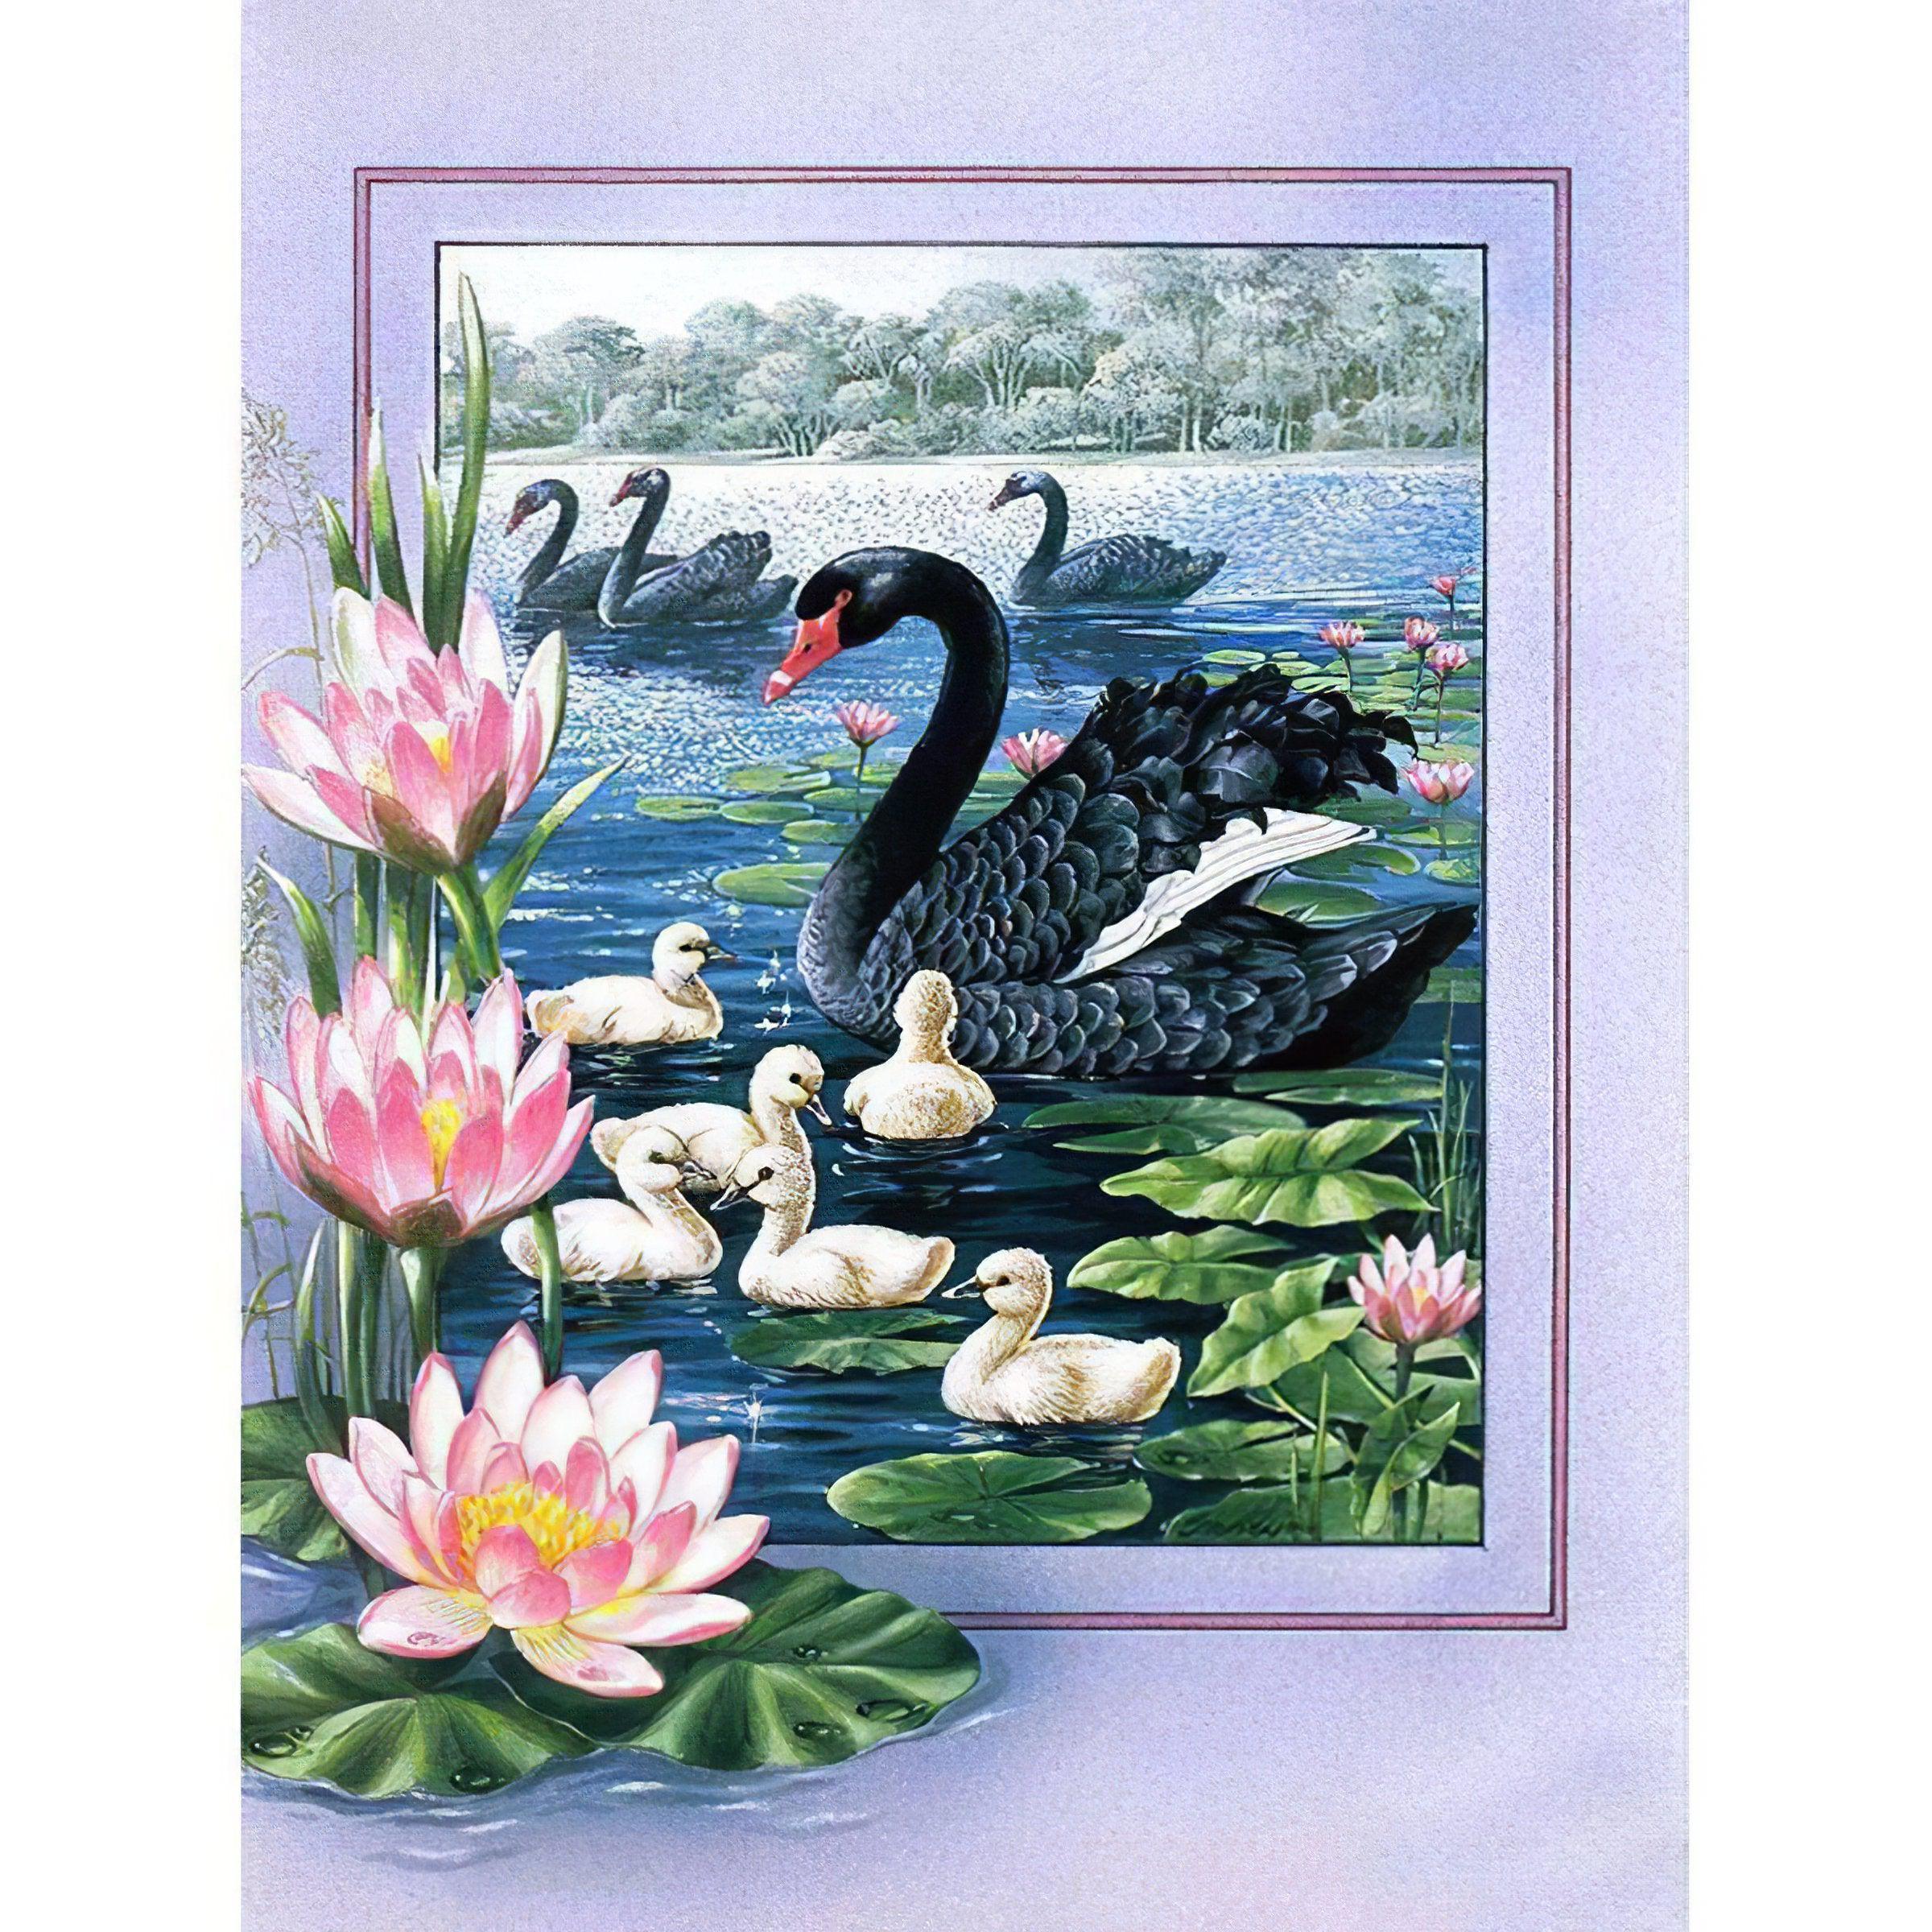 Elegance and transformation captured in the striking image of a black swan. Black Swan - Diamondartlove